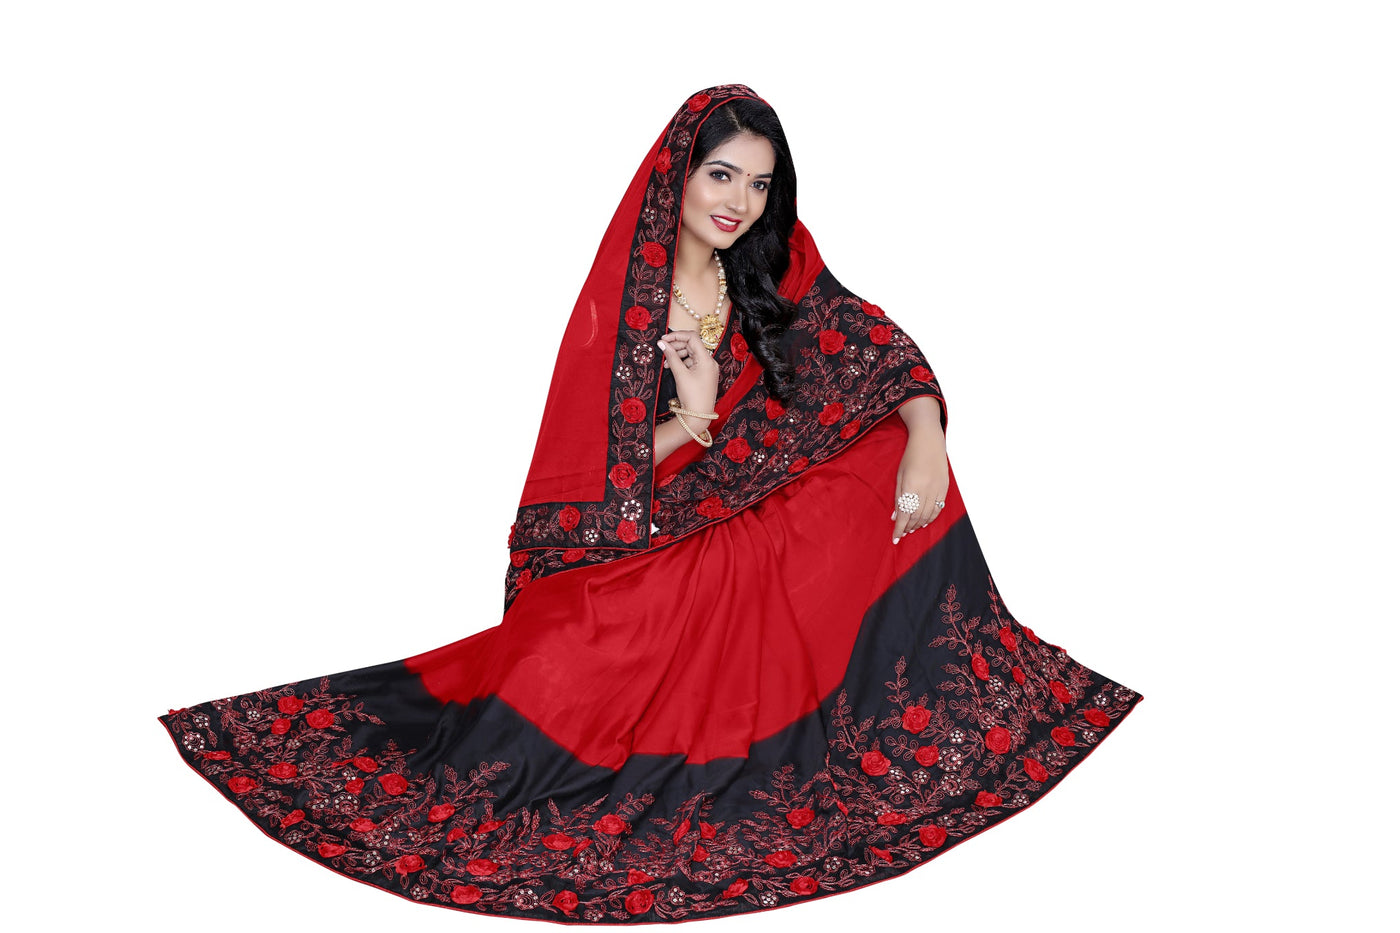 Rangoli silk Red Saree With Blouse